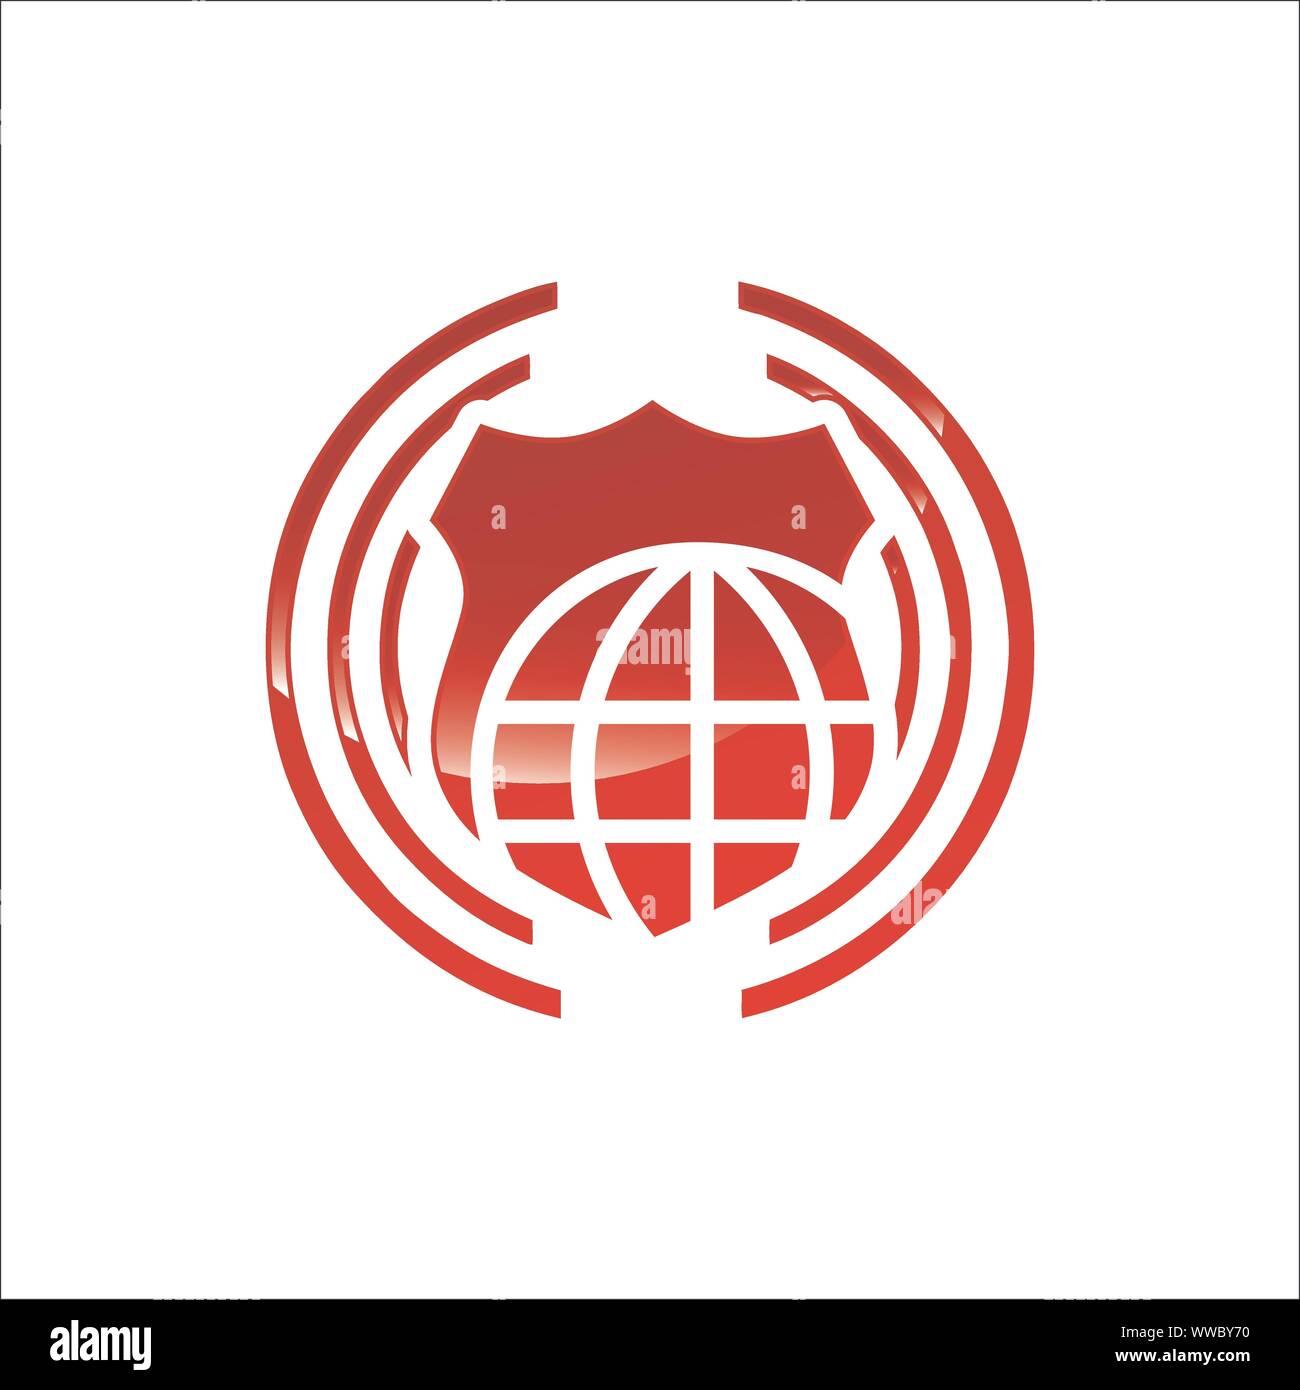 Abstract symbol of world security company shield logo design vector illustrations Stock Vector